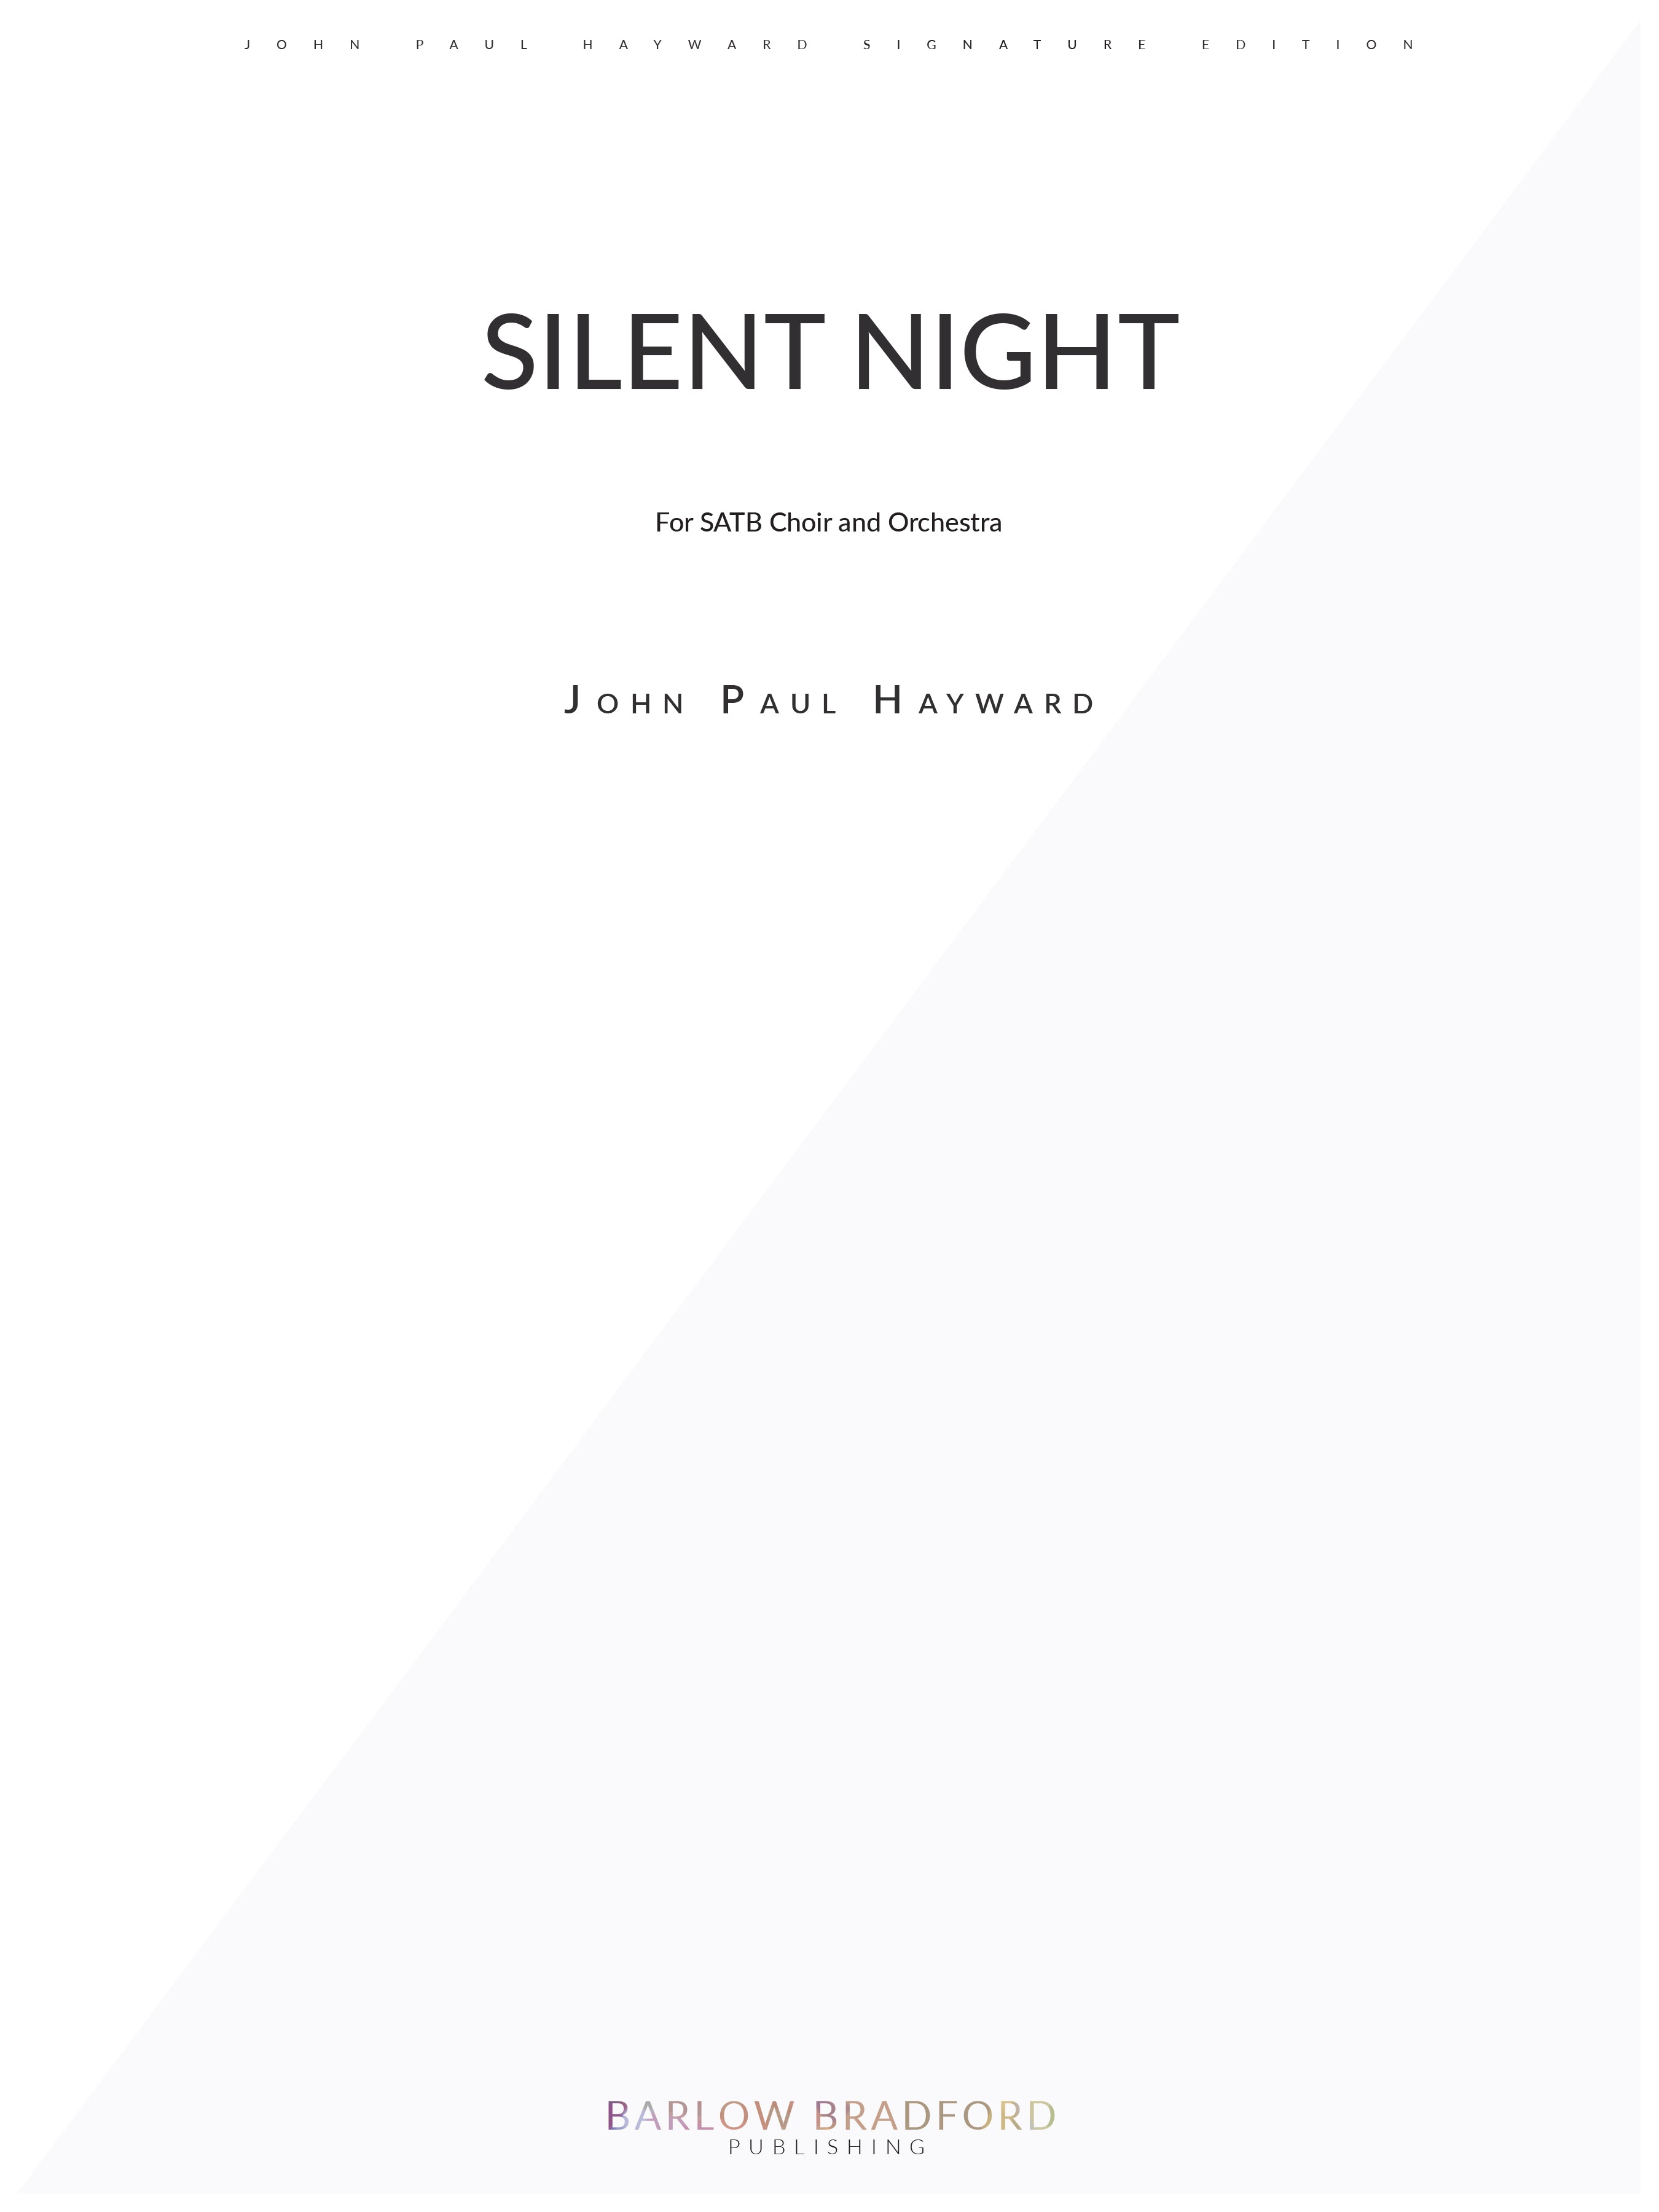 Silent Night - arr. Hayward